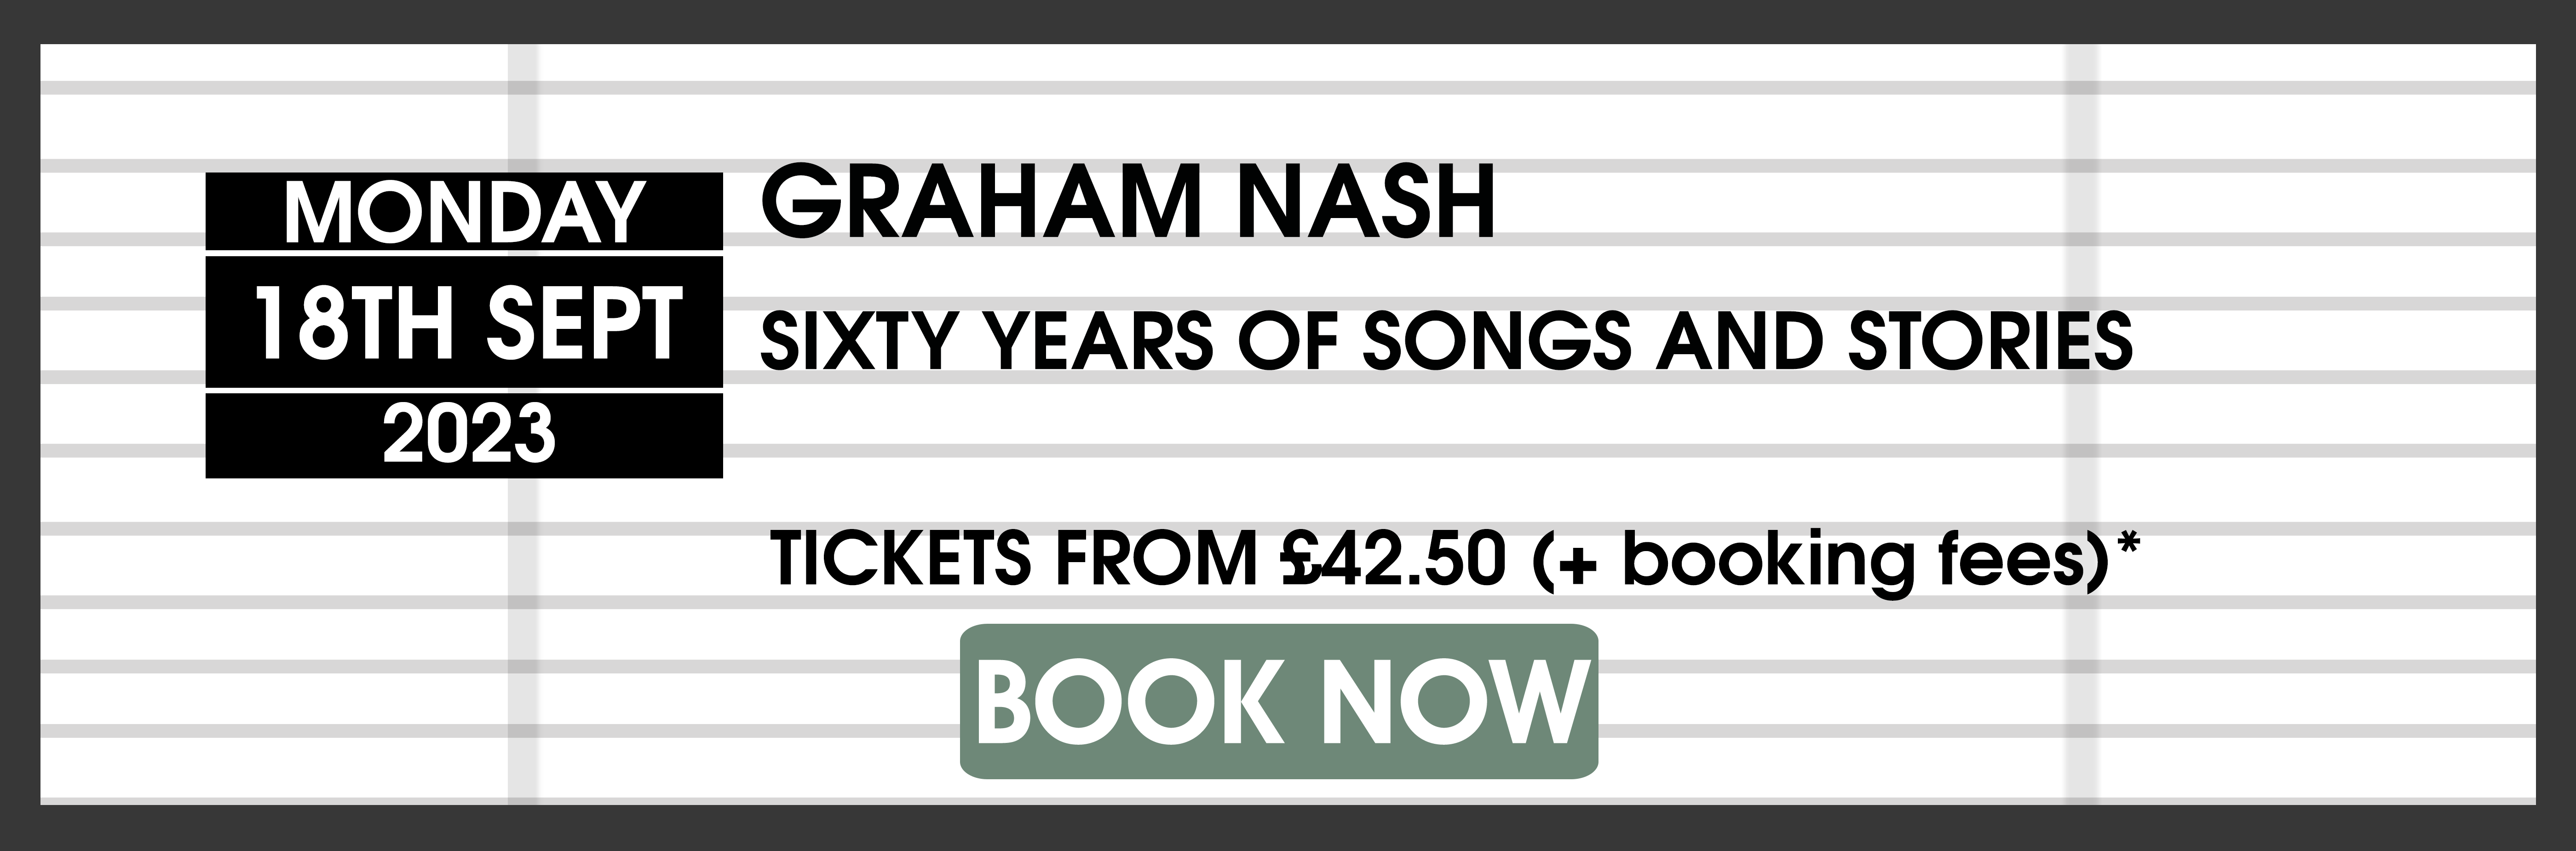 23.09.18 Graham Nash BOOK NOW